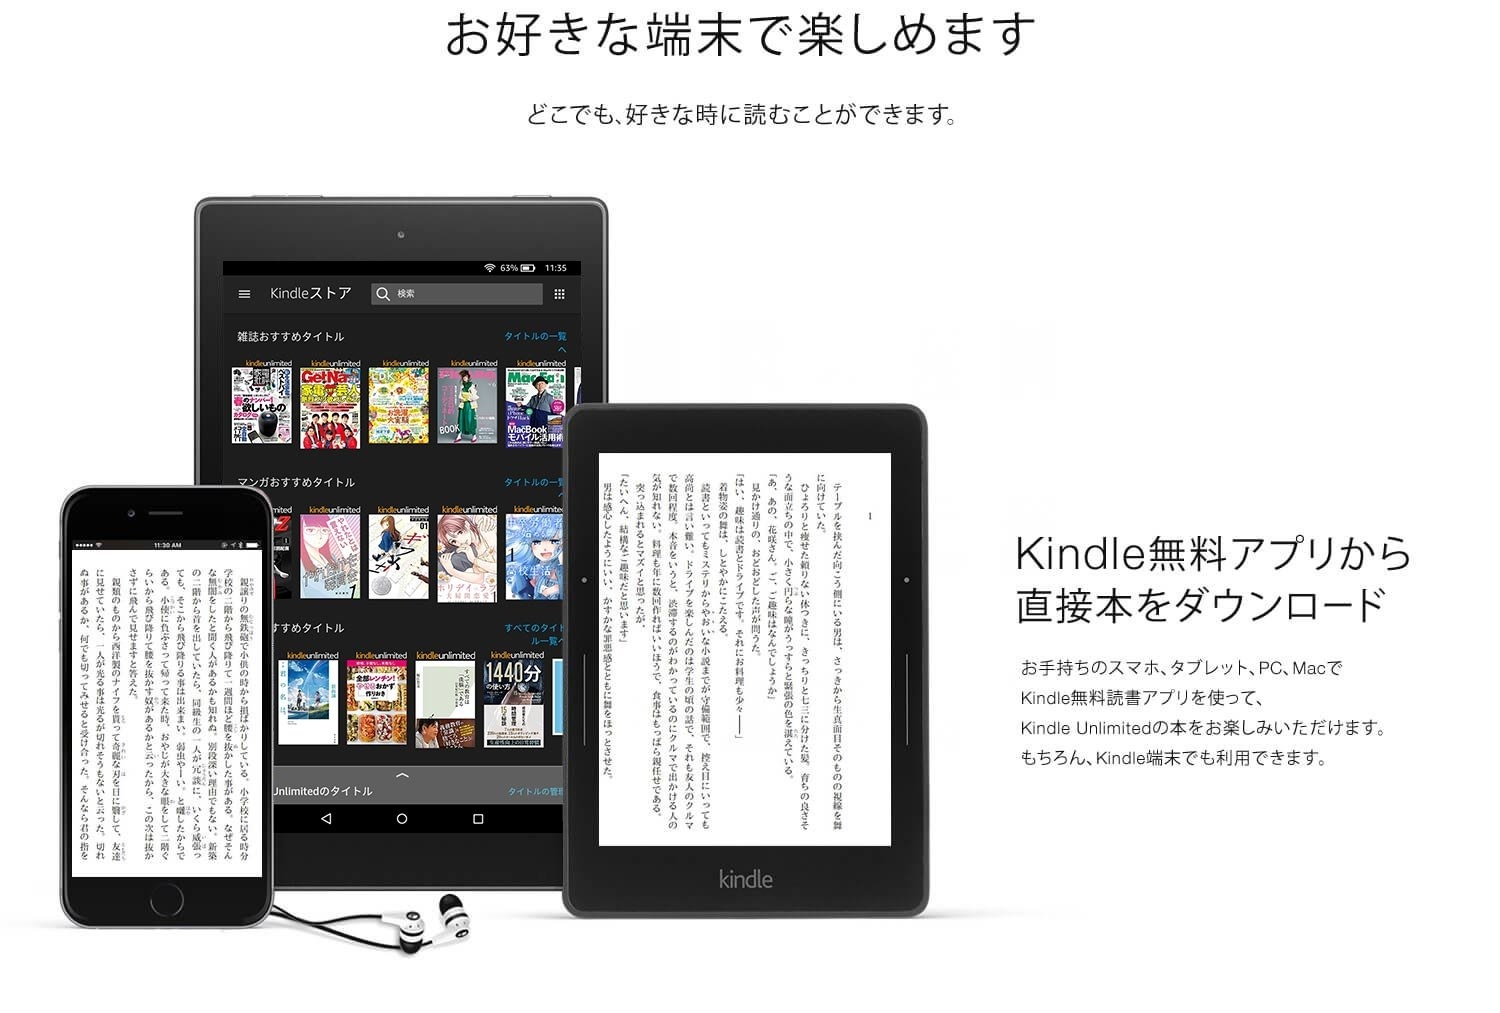 Kindle Unlimitedが今だけ“3か月円”の大特価